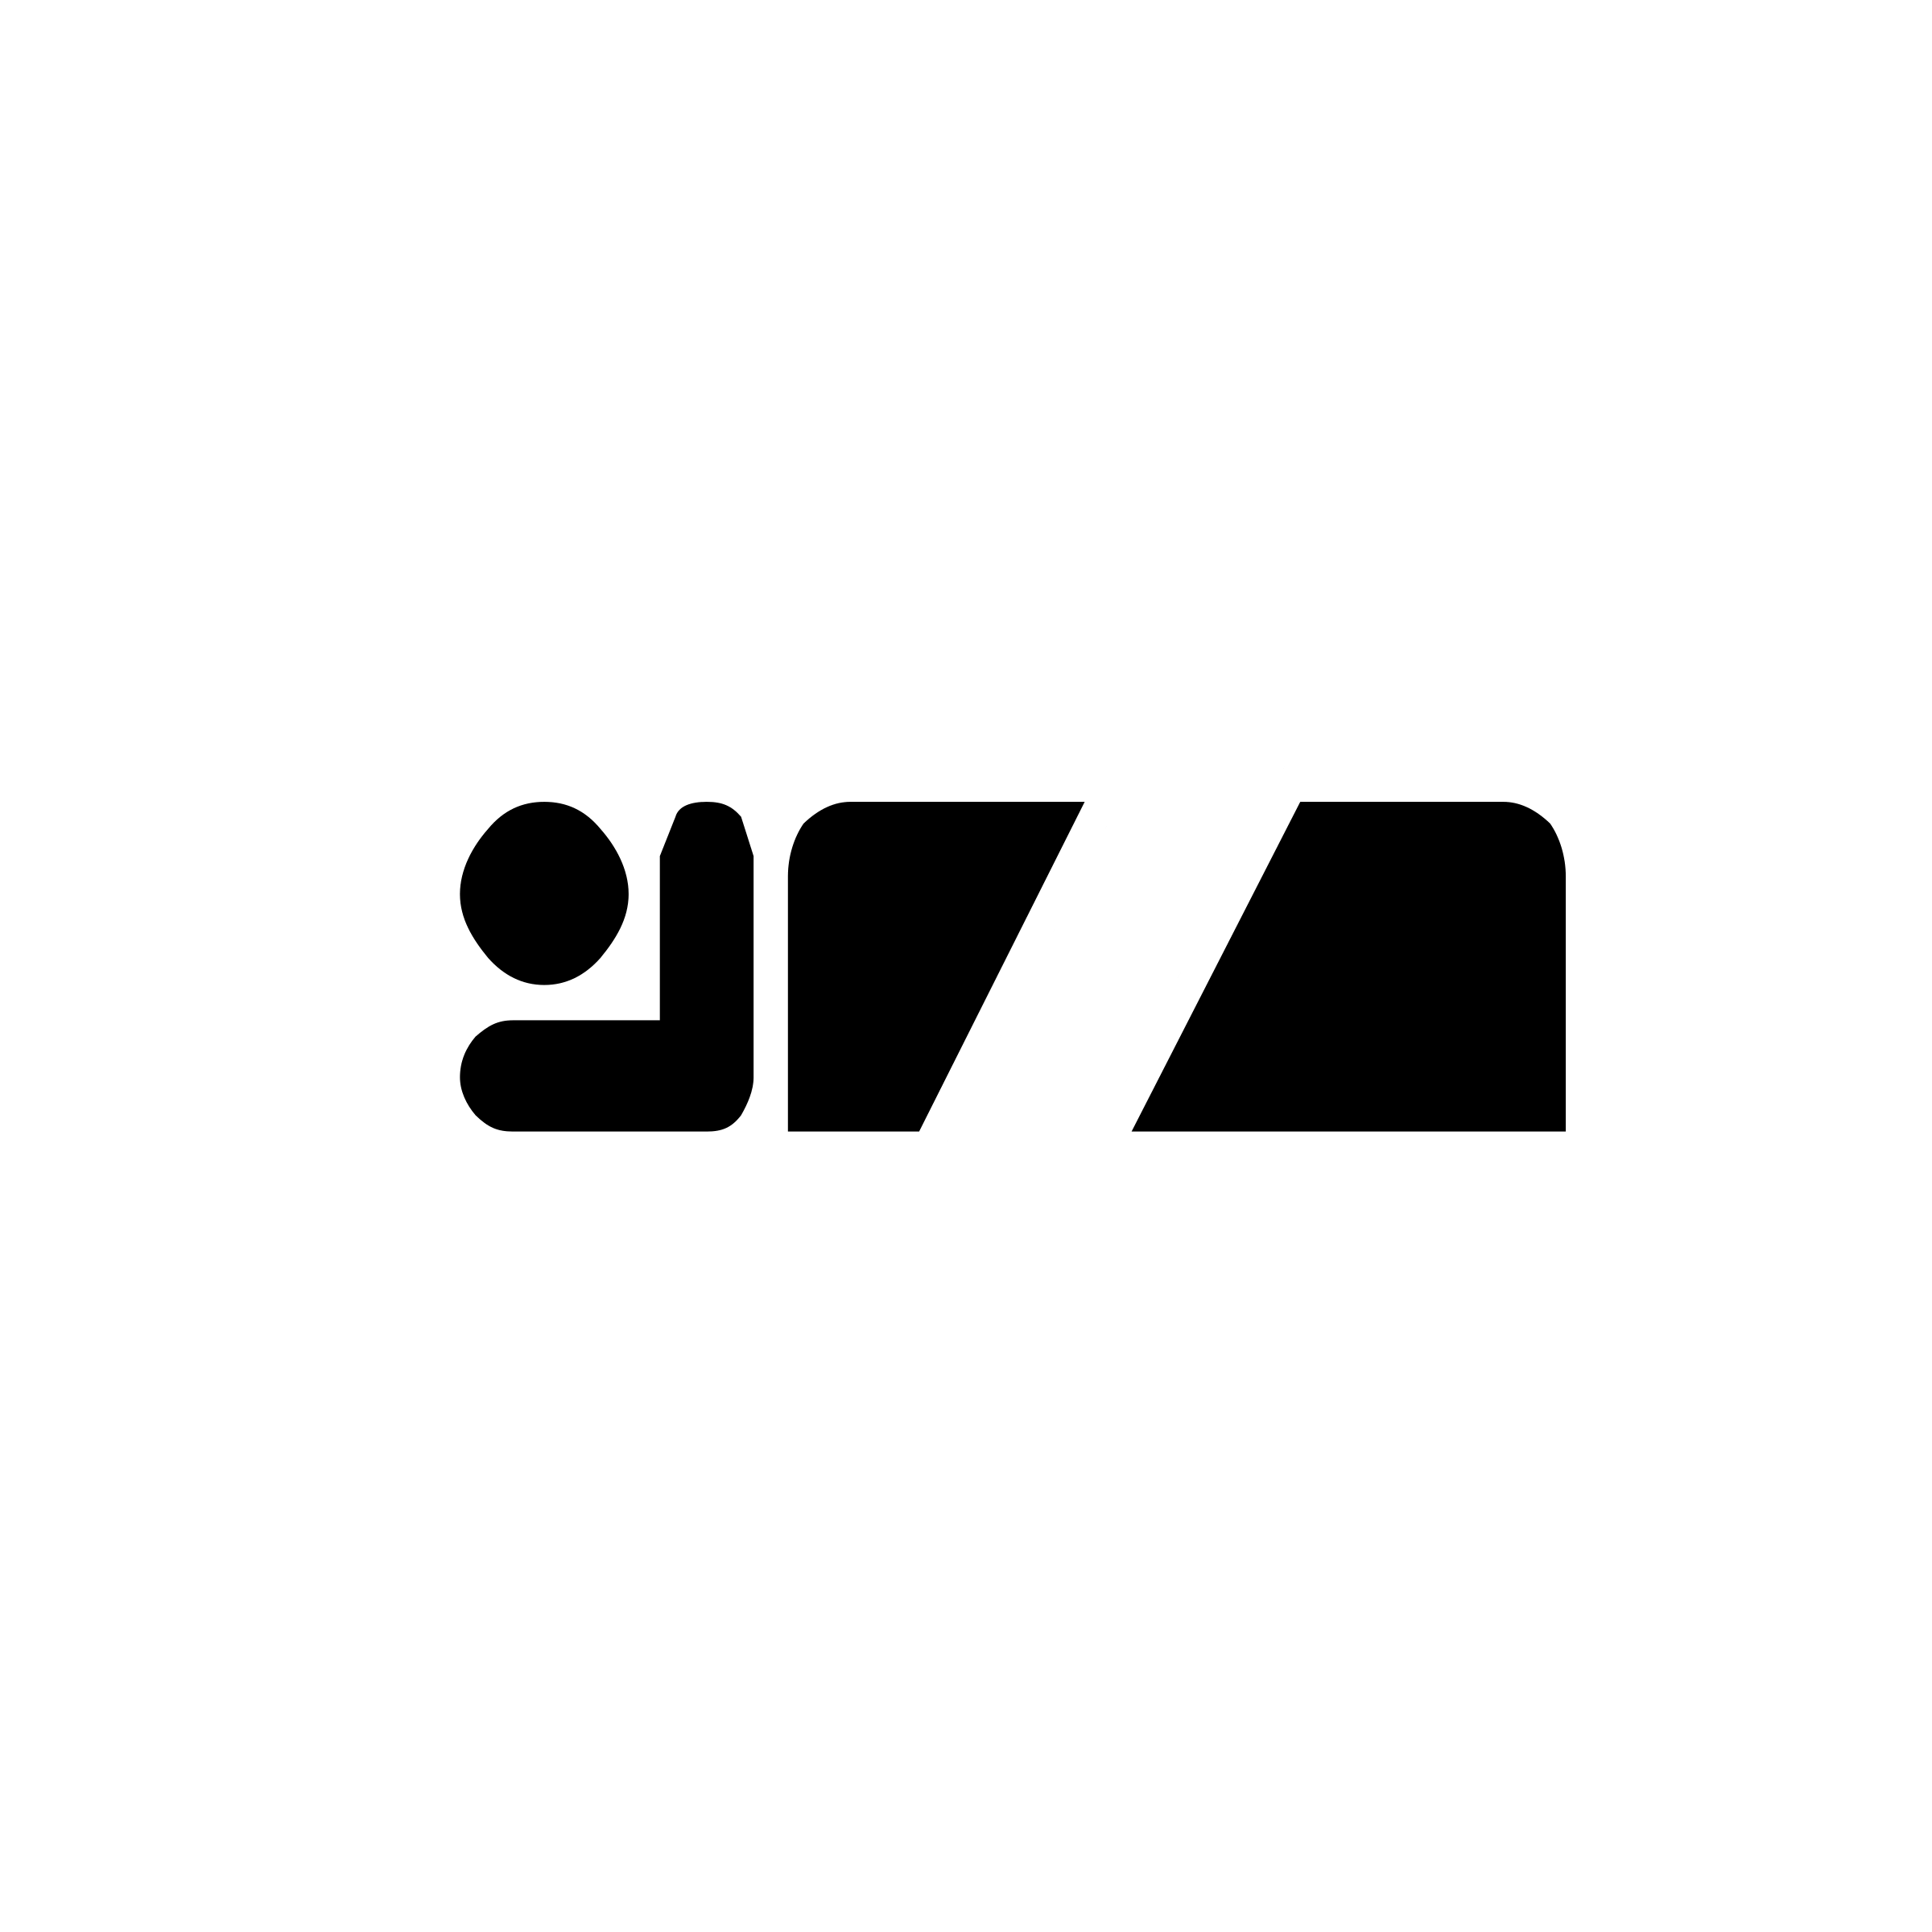 Sleep Logo - No Sleep Logo PNG Transparent & SVG Vector - Freebie Supply